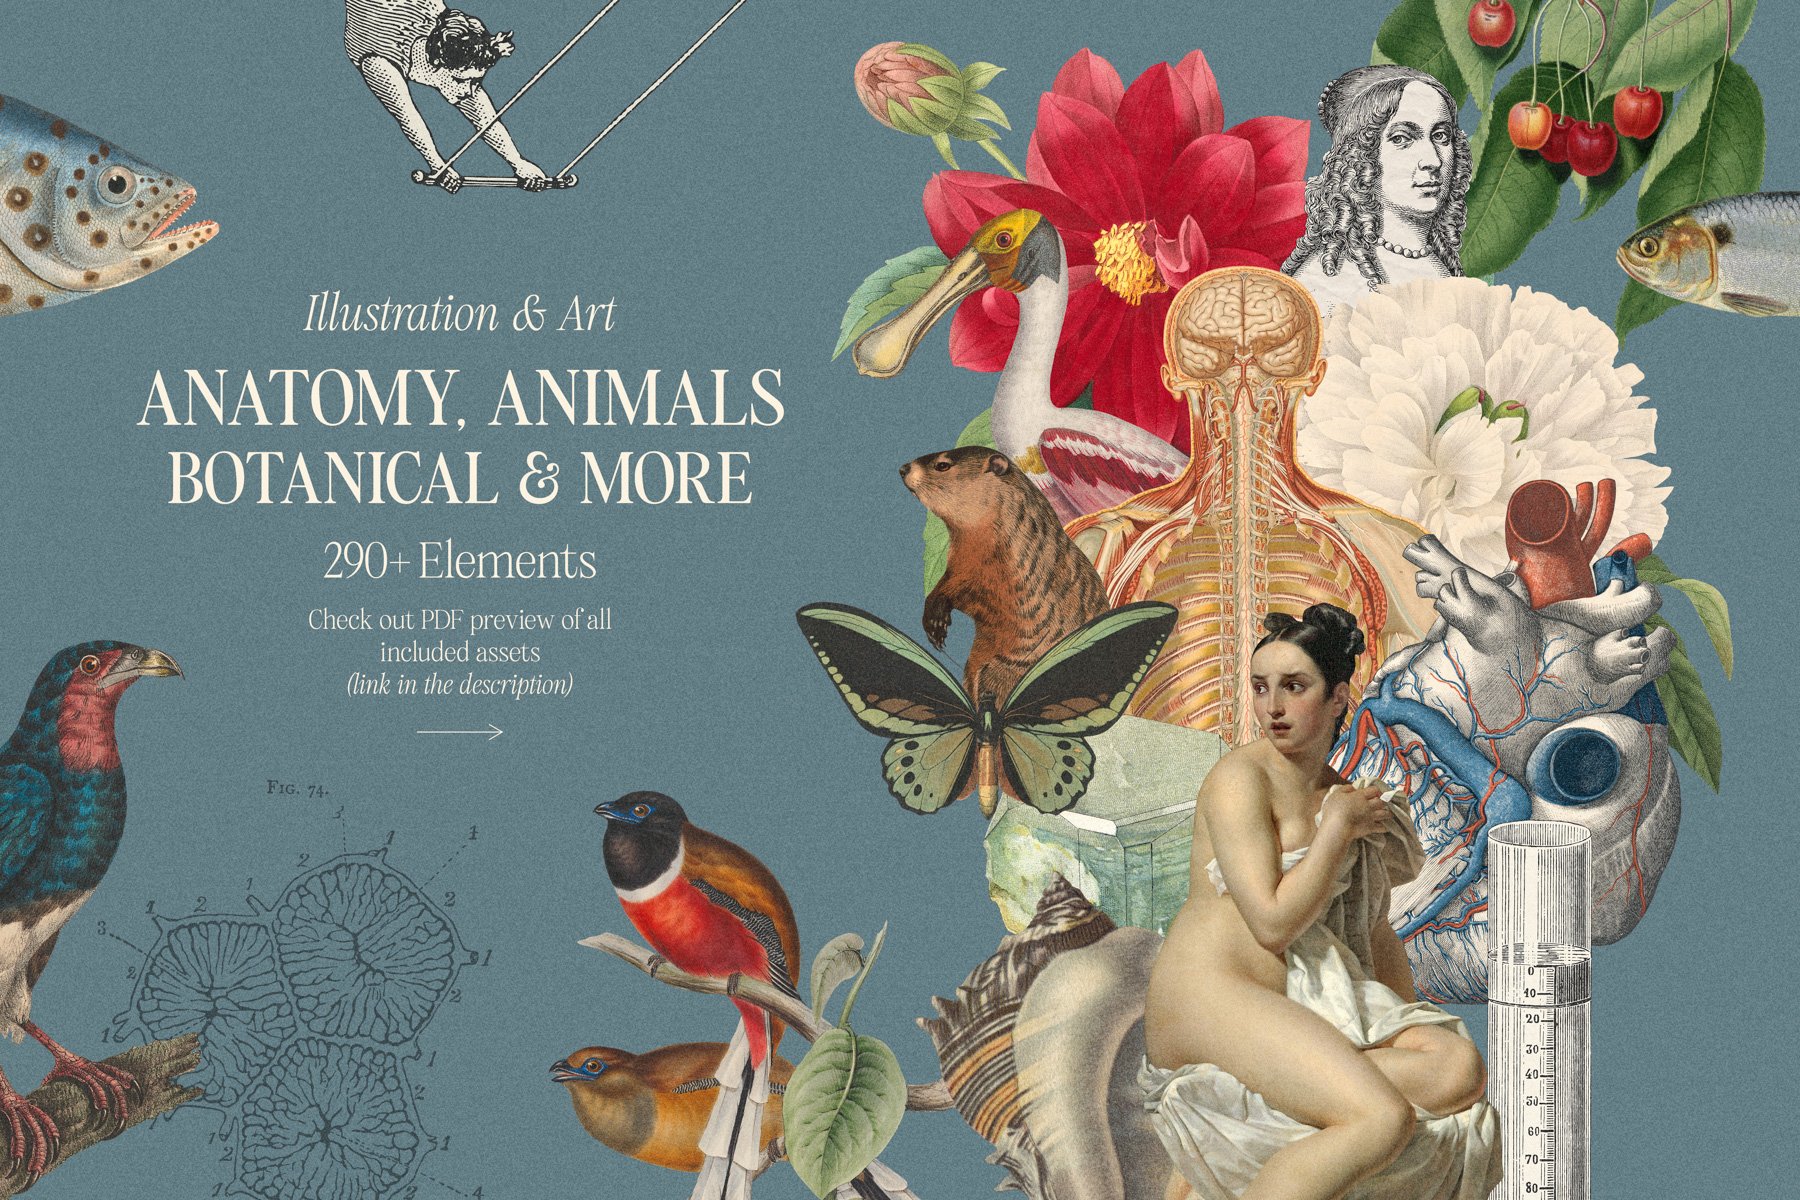 Anatomy, animals and botanical illustrations.